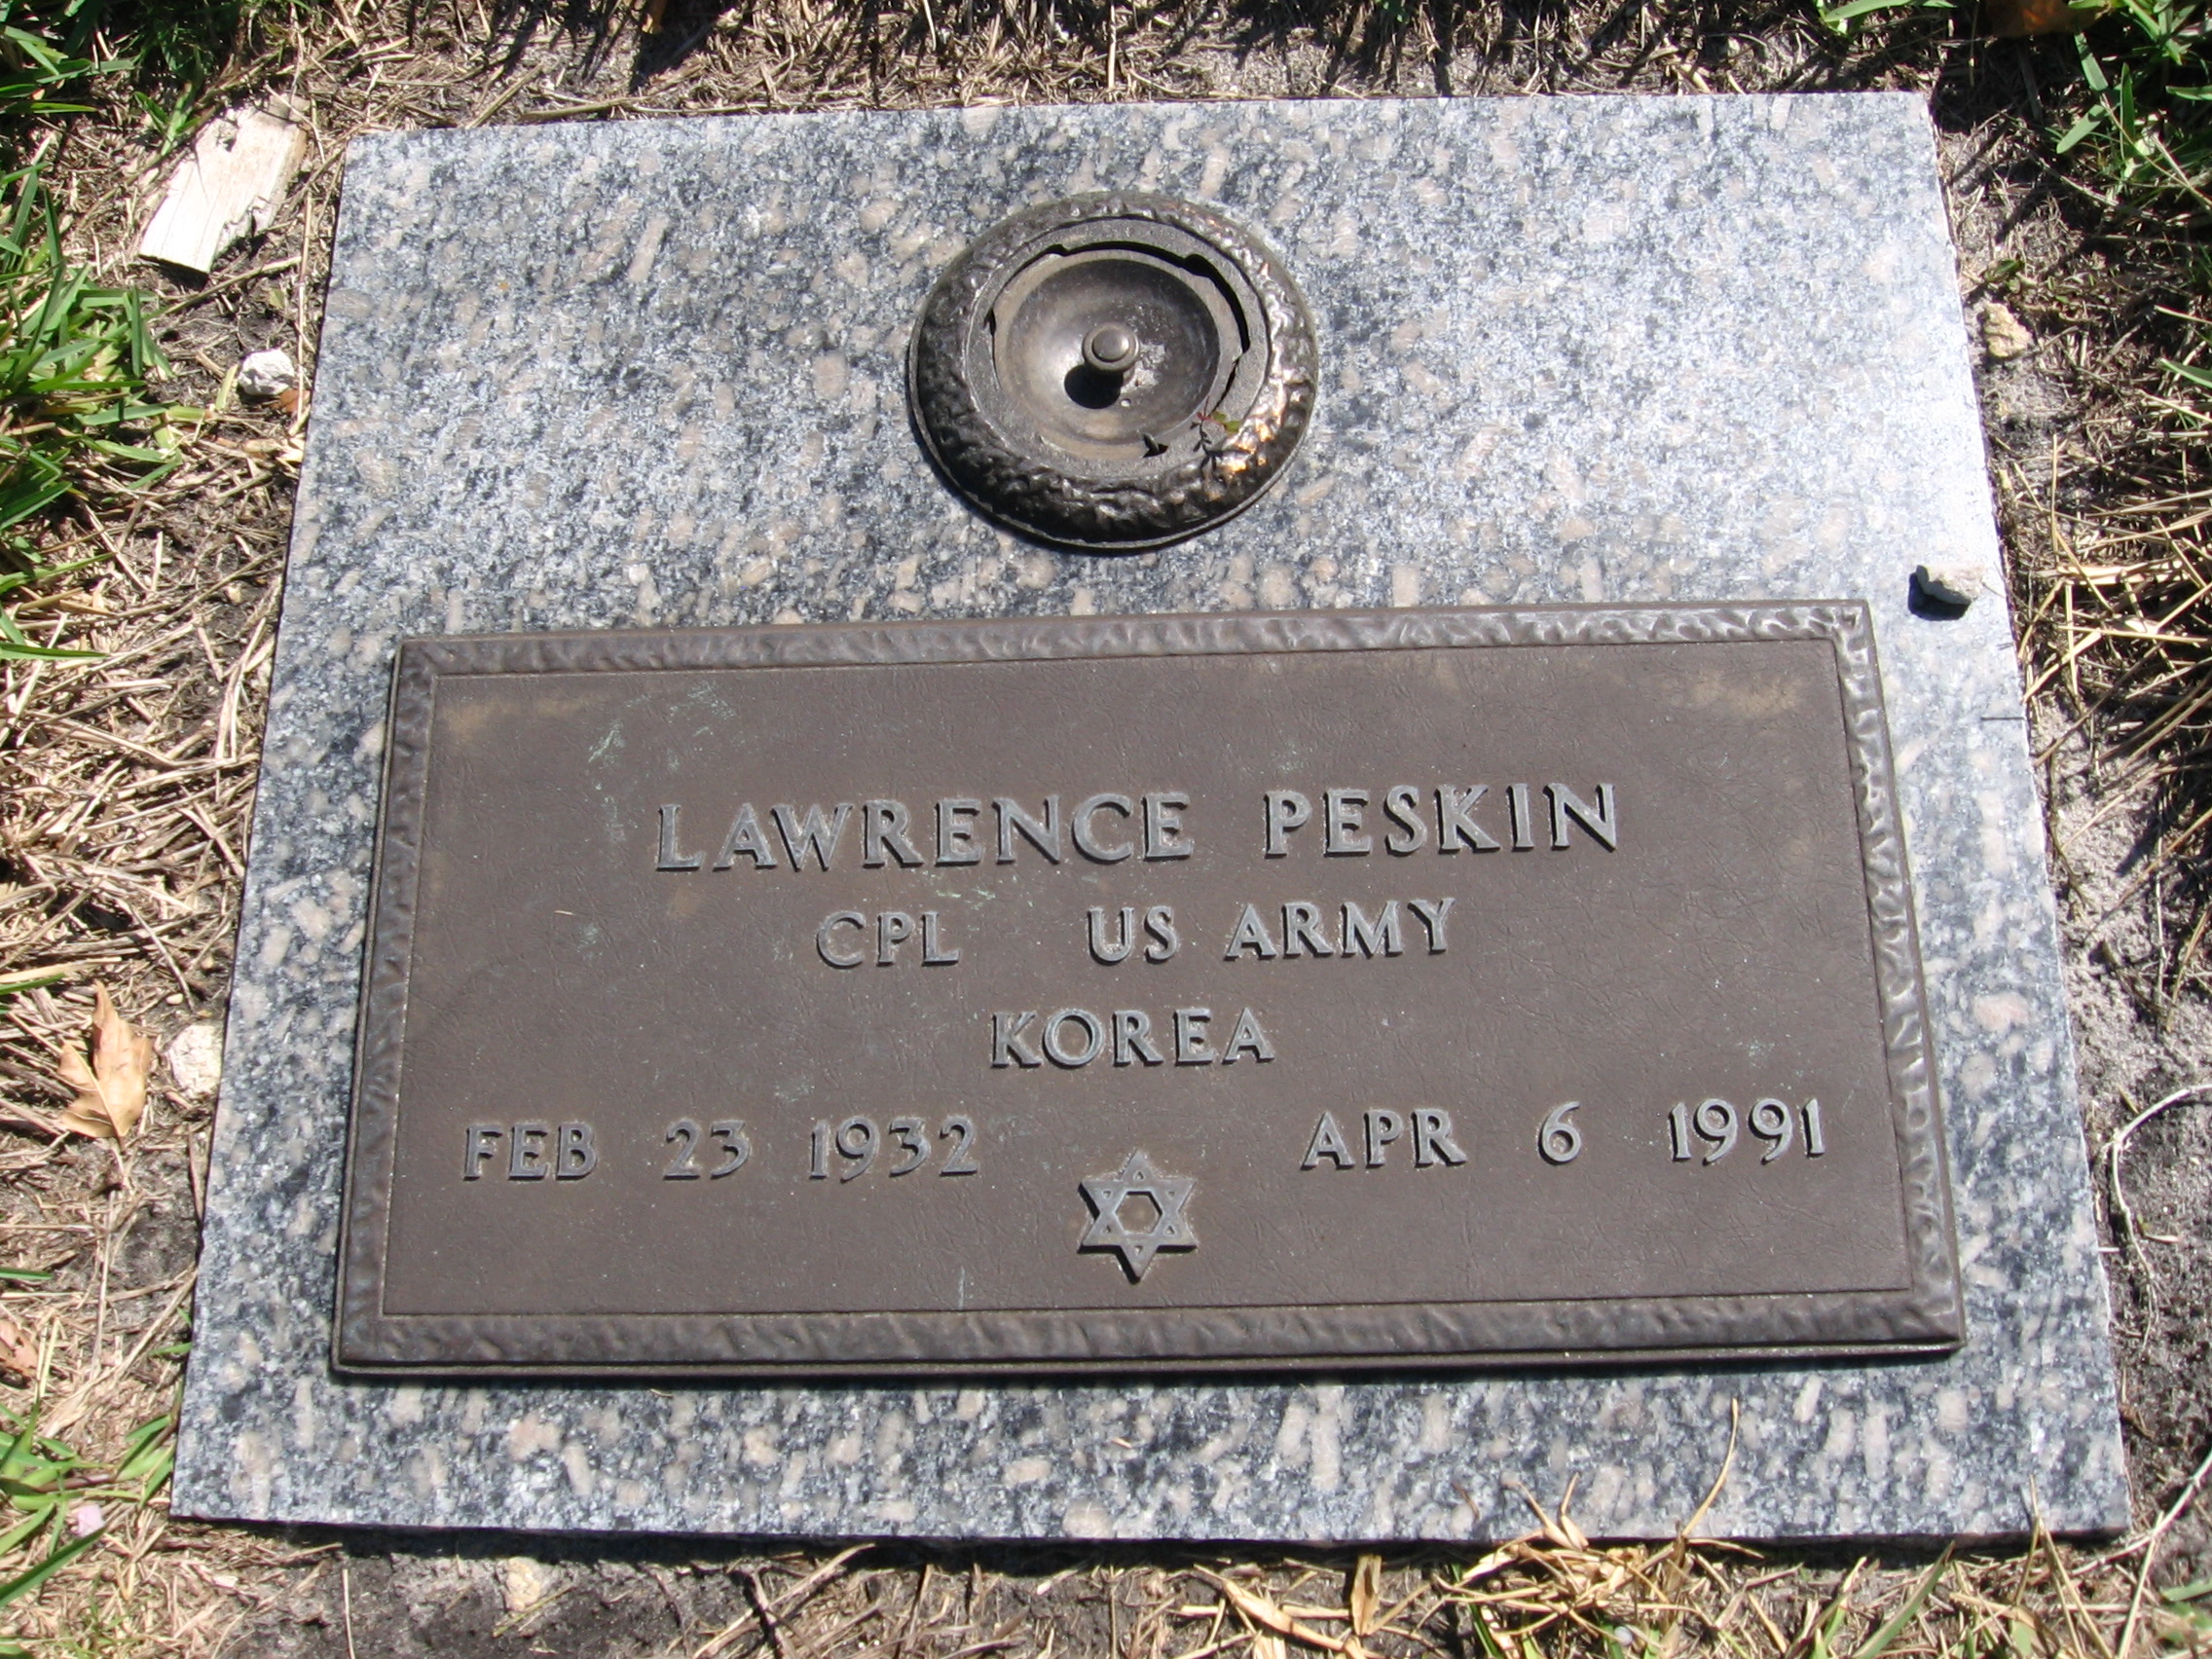 Corp Lawrence Peskin